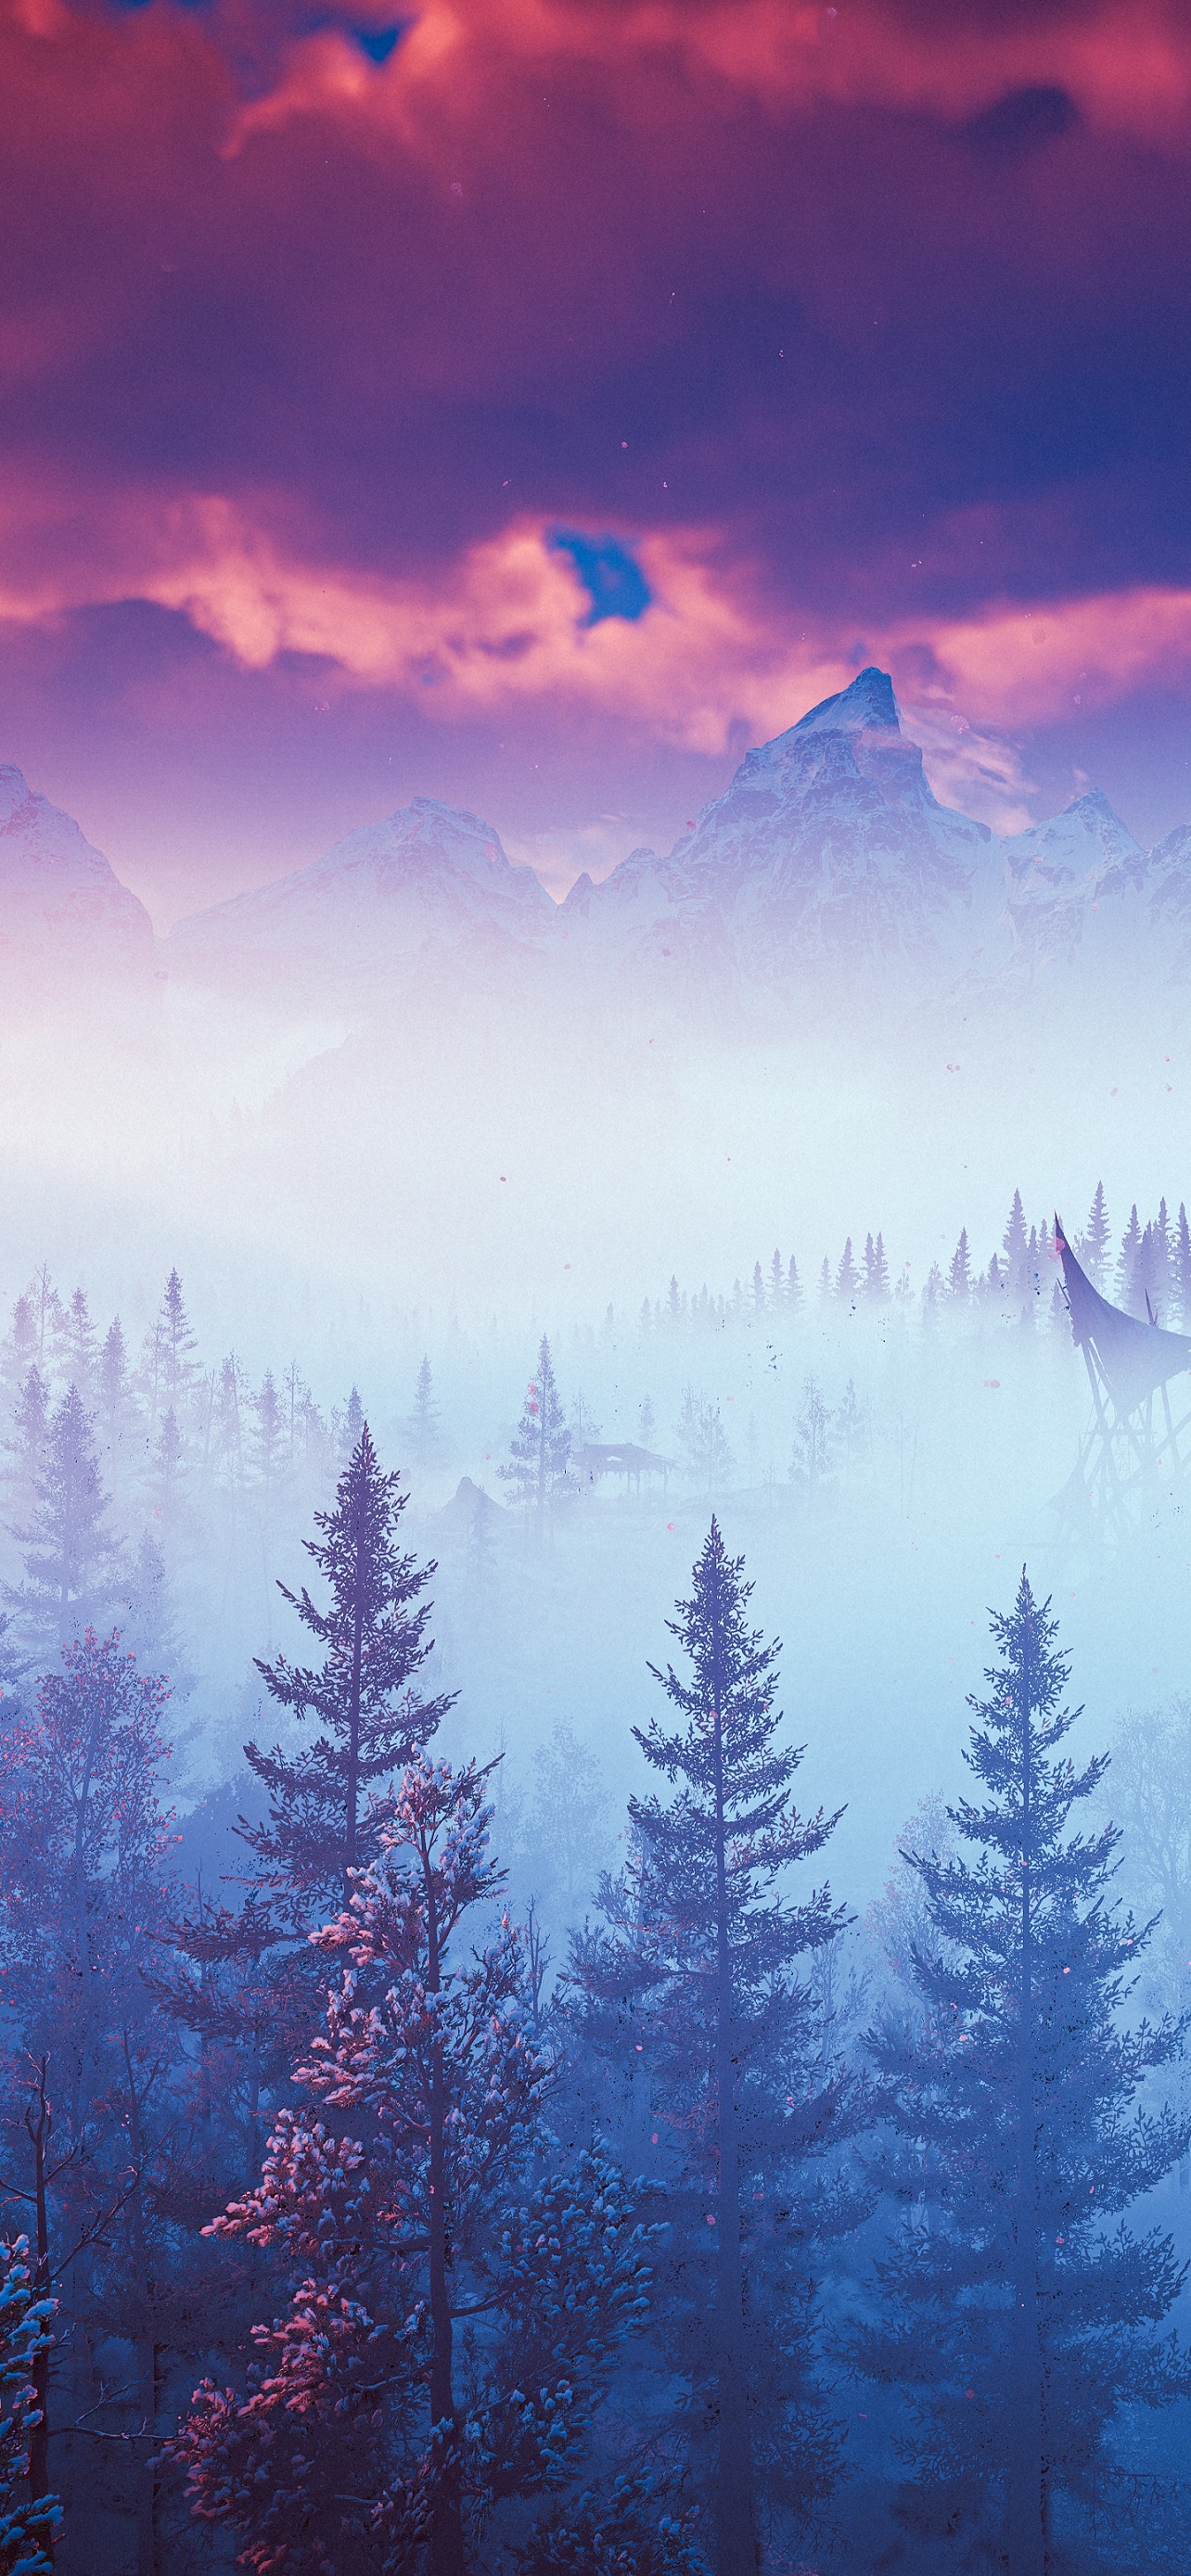 Horizon Zero Dawn Wallpaper 4k Scenery Foggy Playstation 4 Screenshot 5k Nature 3965